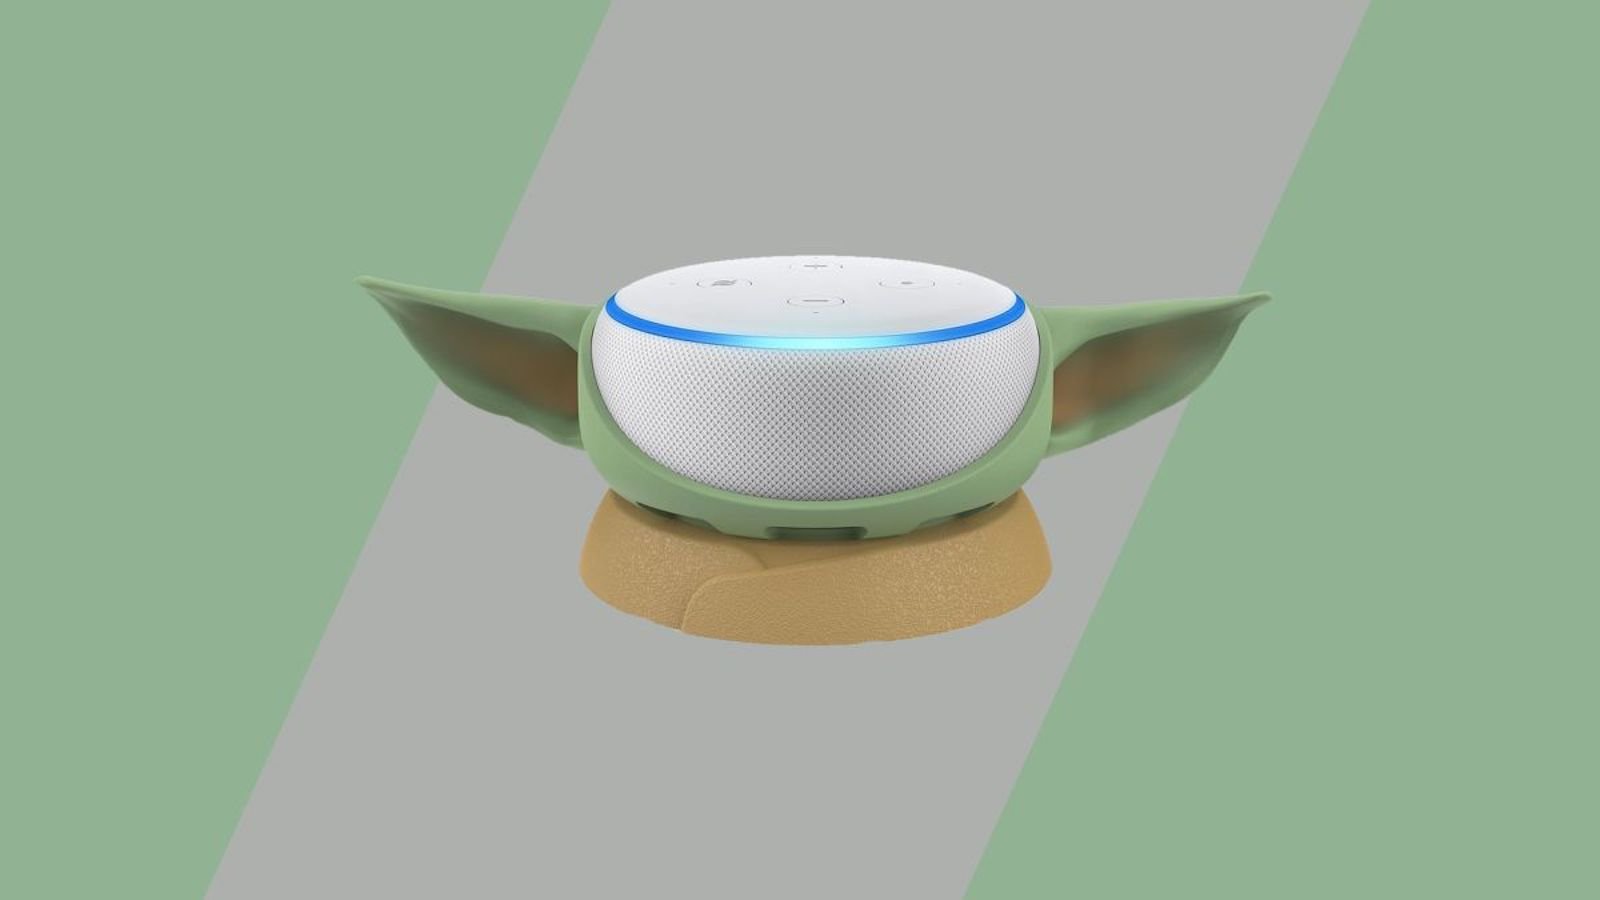 Otterbox Mandalorian Amazon Echo Dot Case turns your device into Baby Yoda